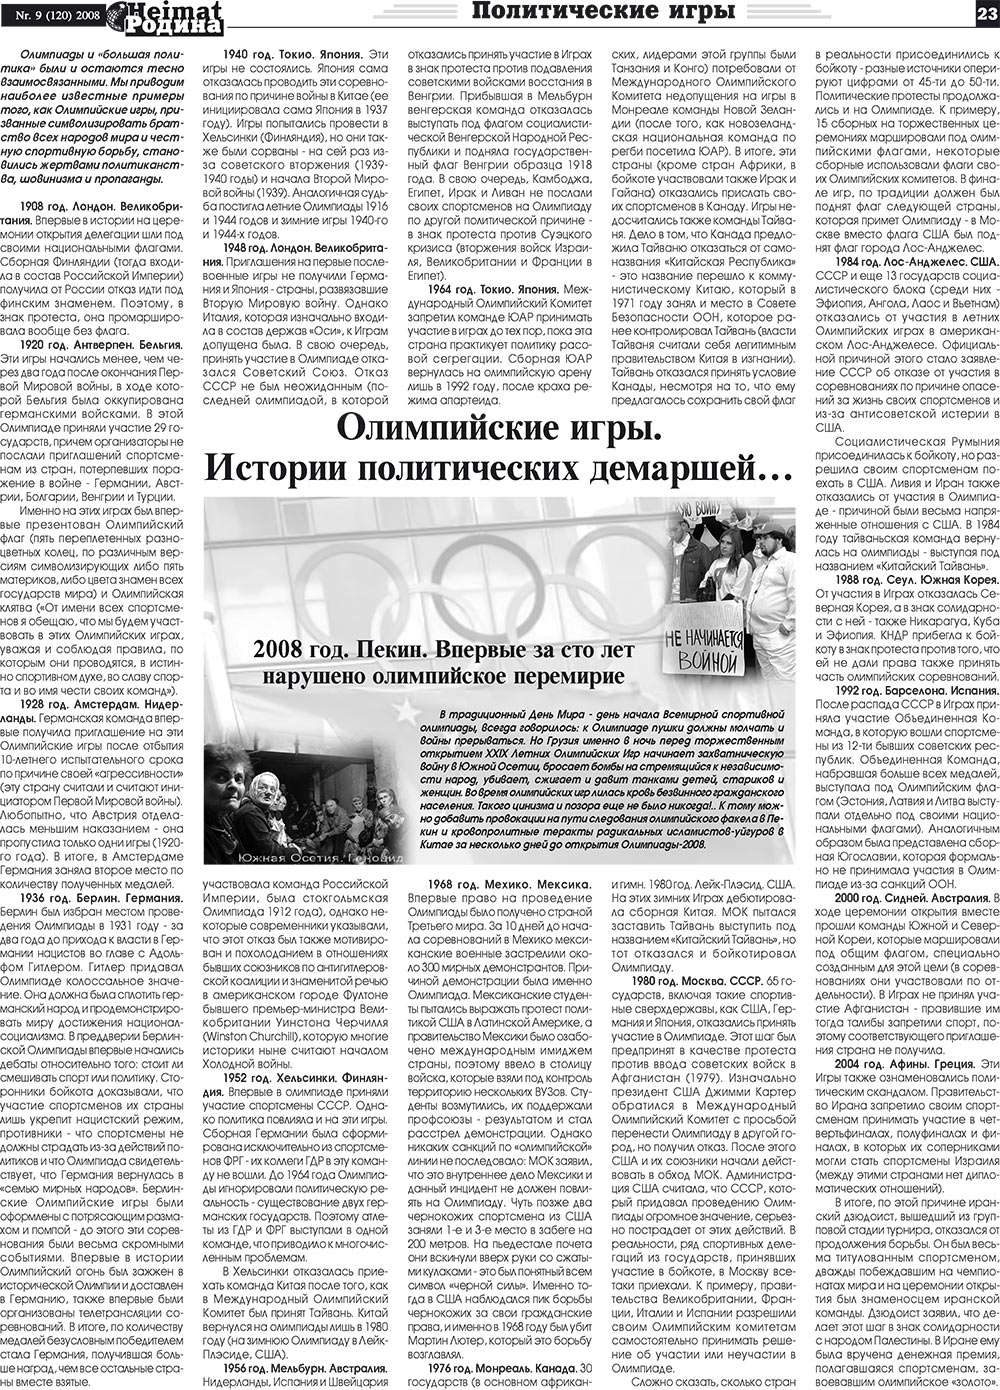 Heimat-Родина, газета. 2008 №9 стр.23